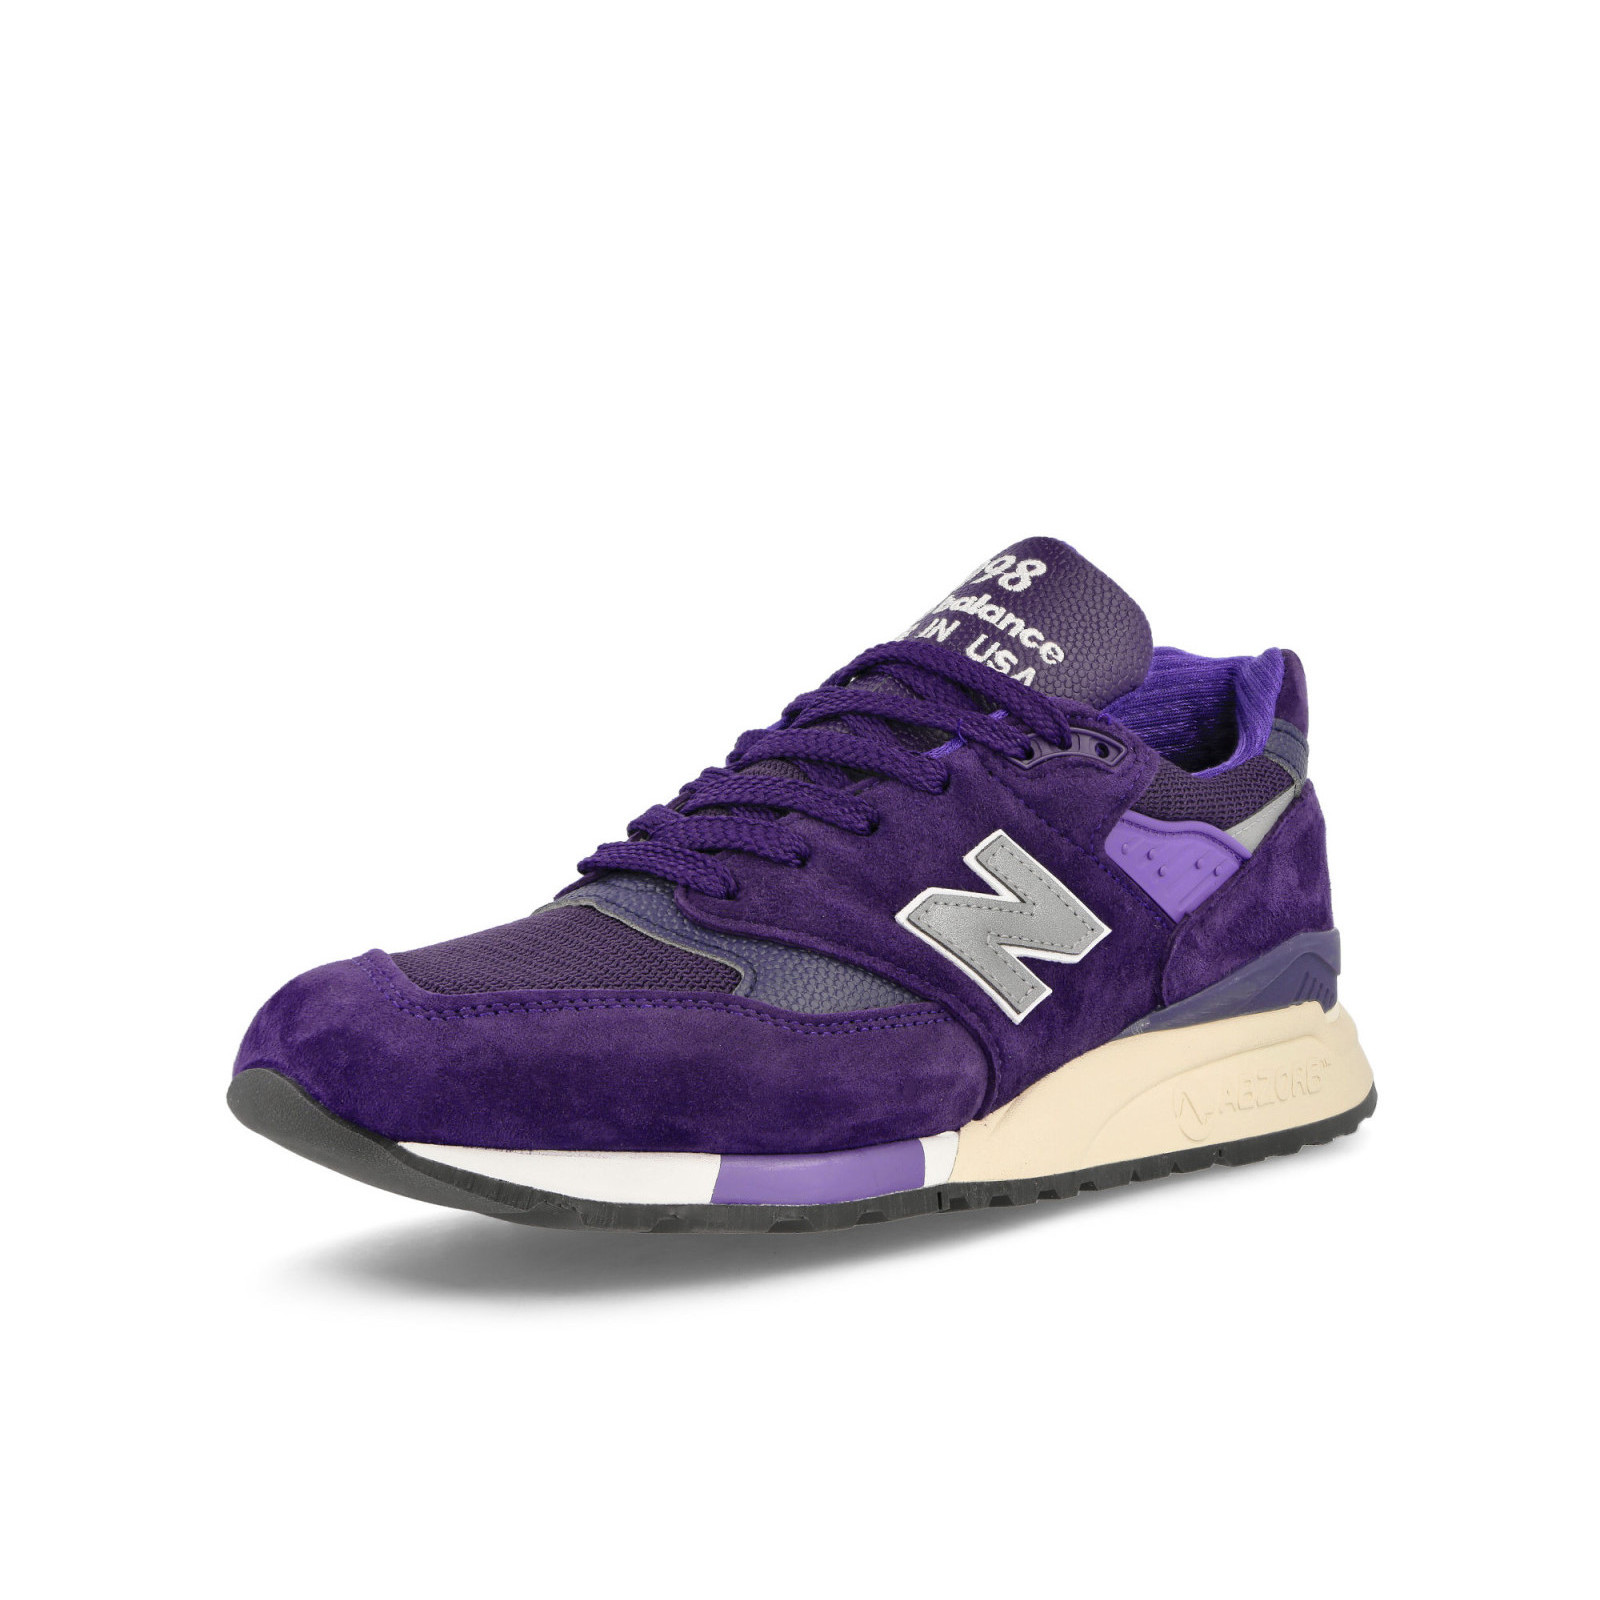 New Balance U998TE
Dark Purple